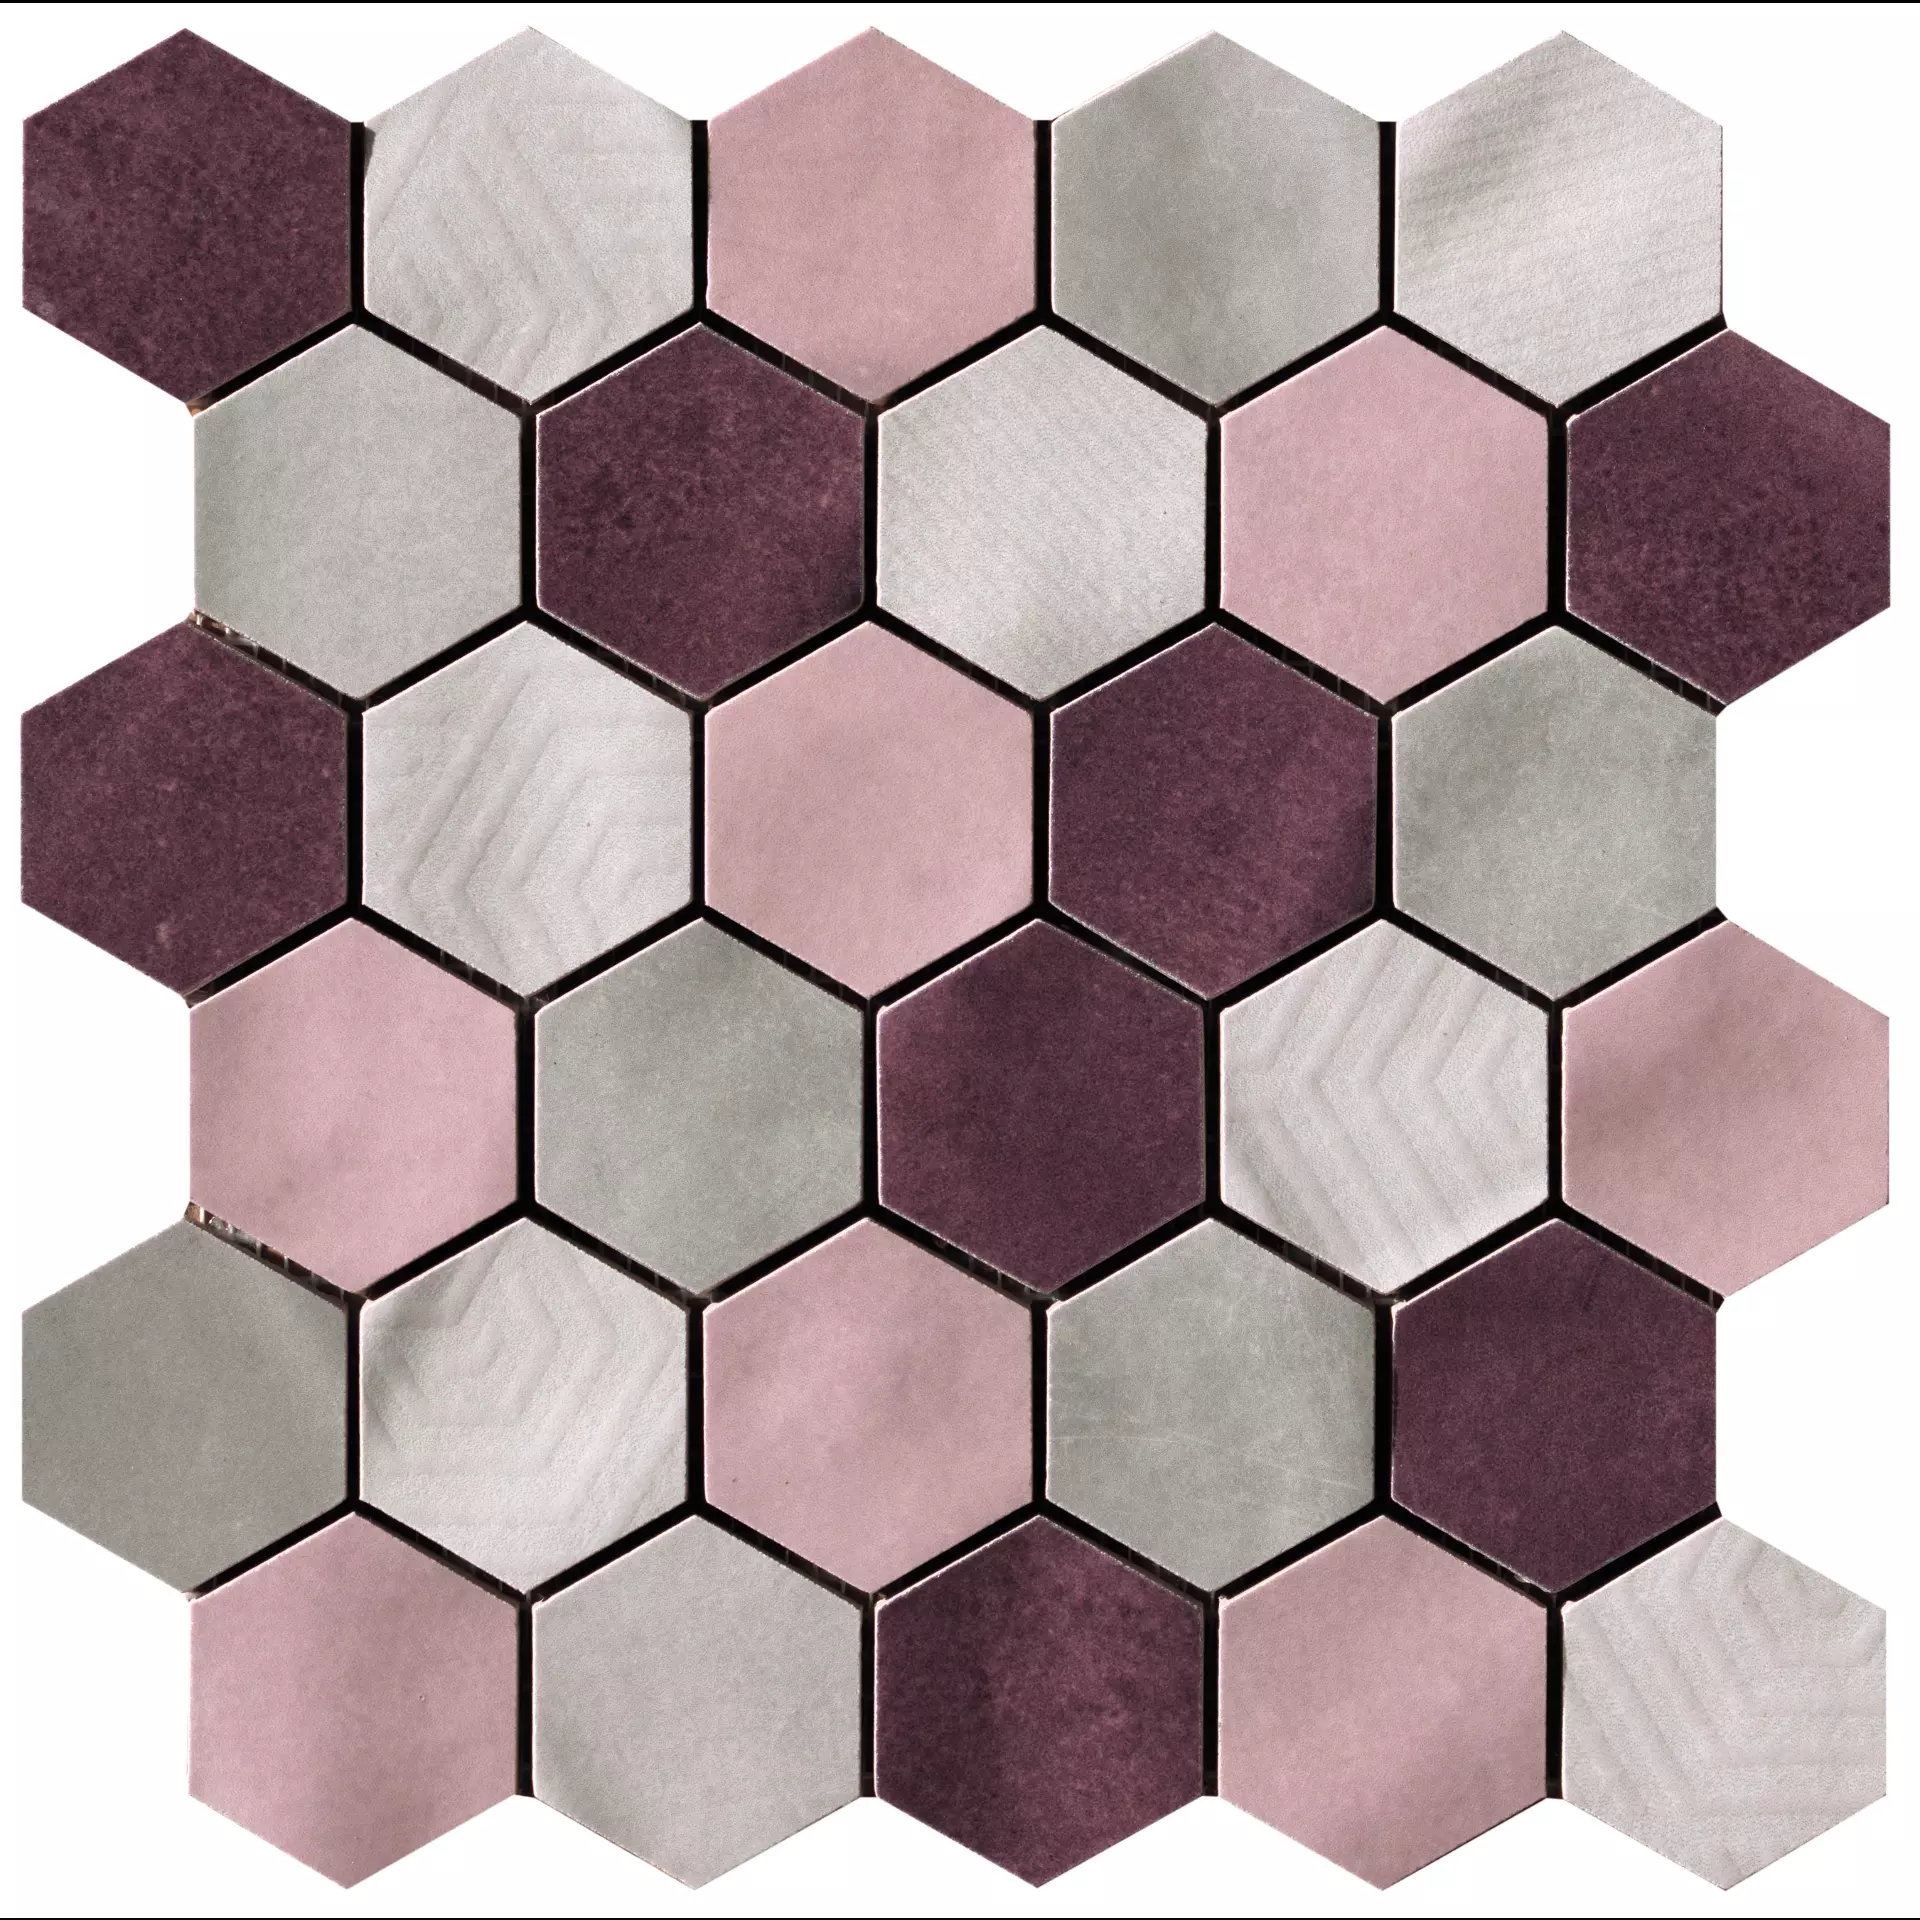 CIR Materia Prima Pink Naturale Mosaic Hexagon Mix 1069922 27x27cm 10mm